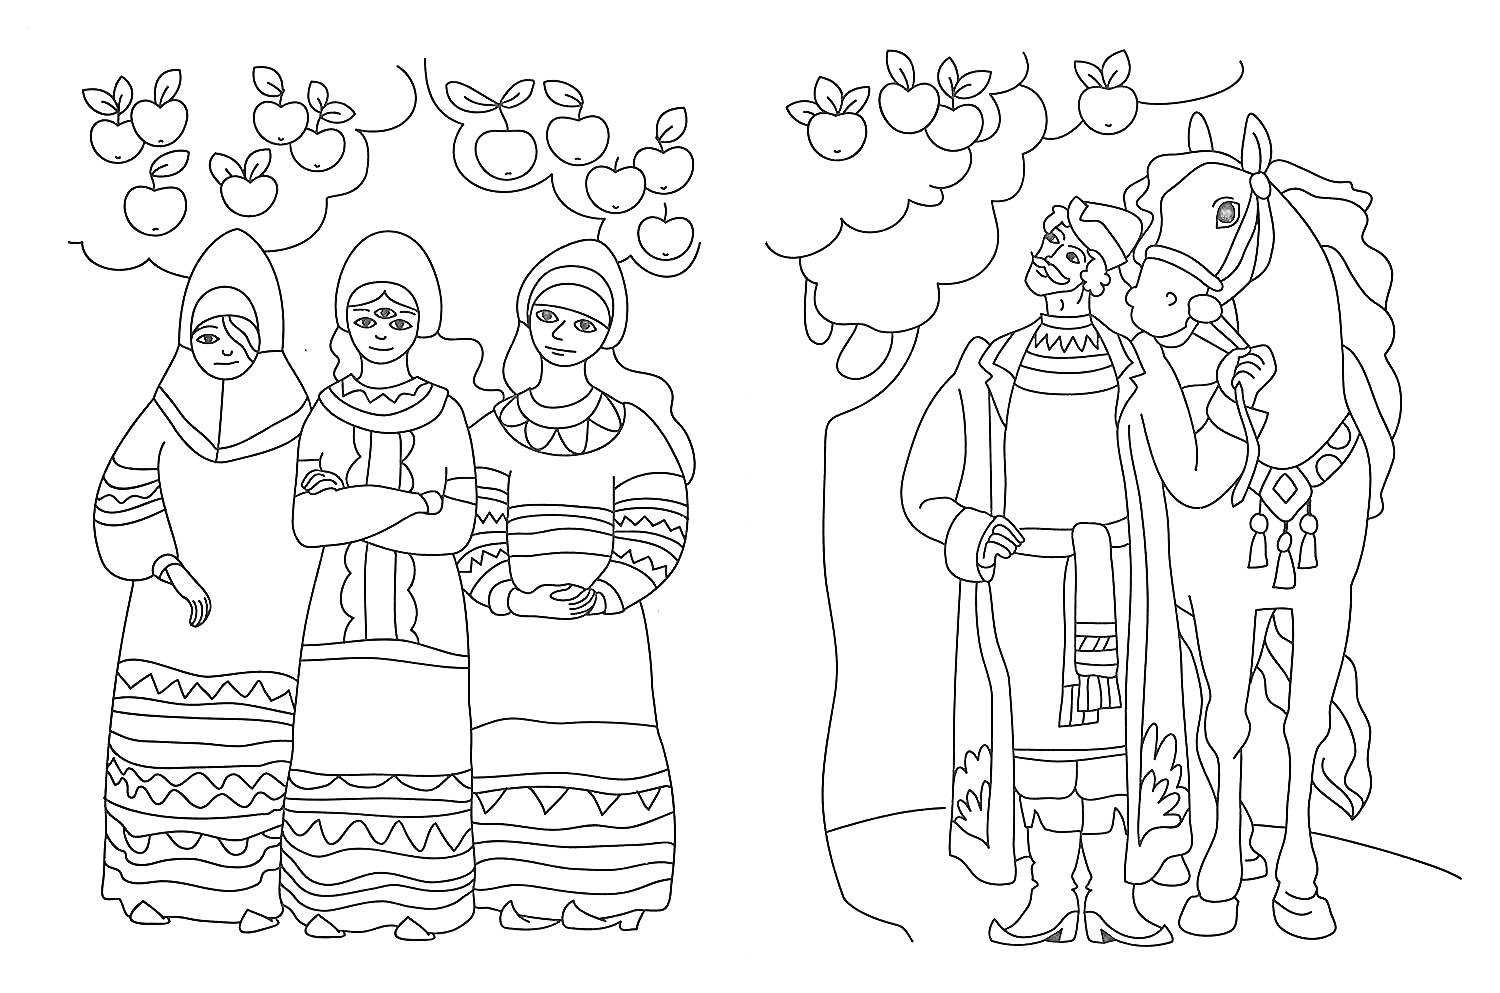 Раскраска Три девушки и молодой человек с лошадью под яблонями.